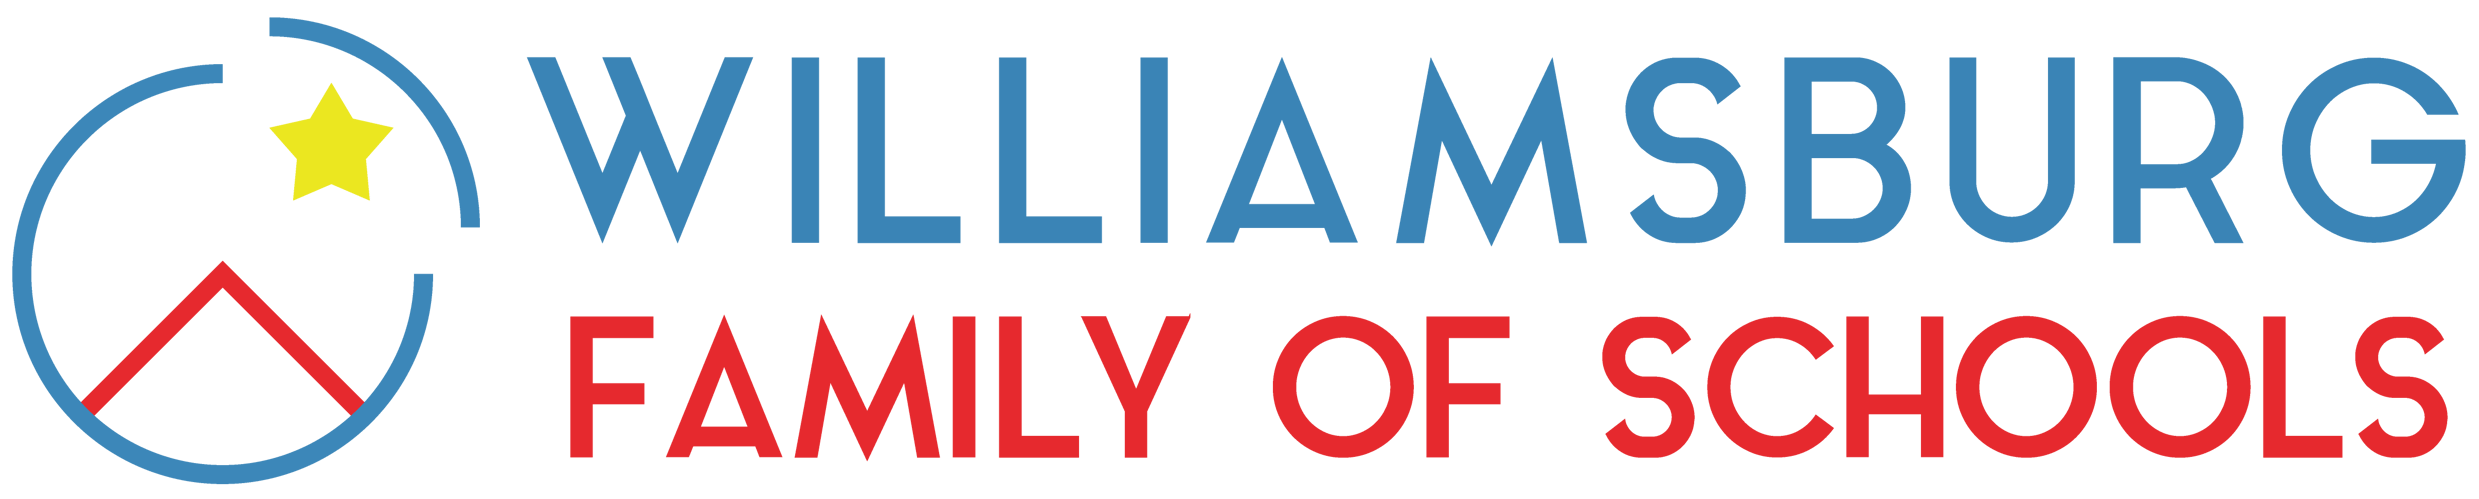 Williamsburg-family-of-schools-logo